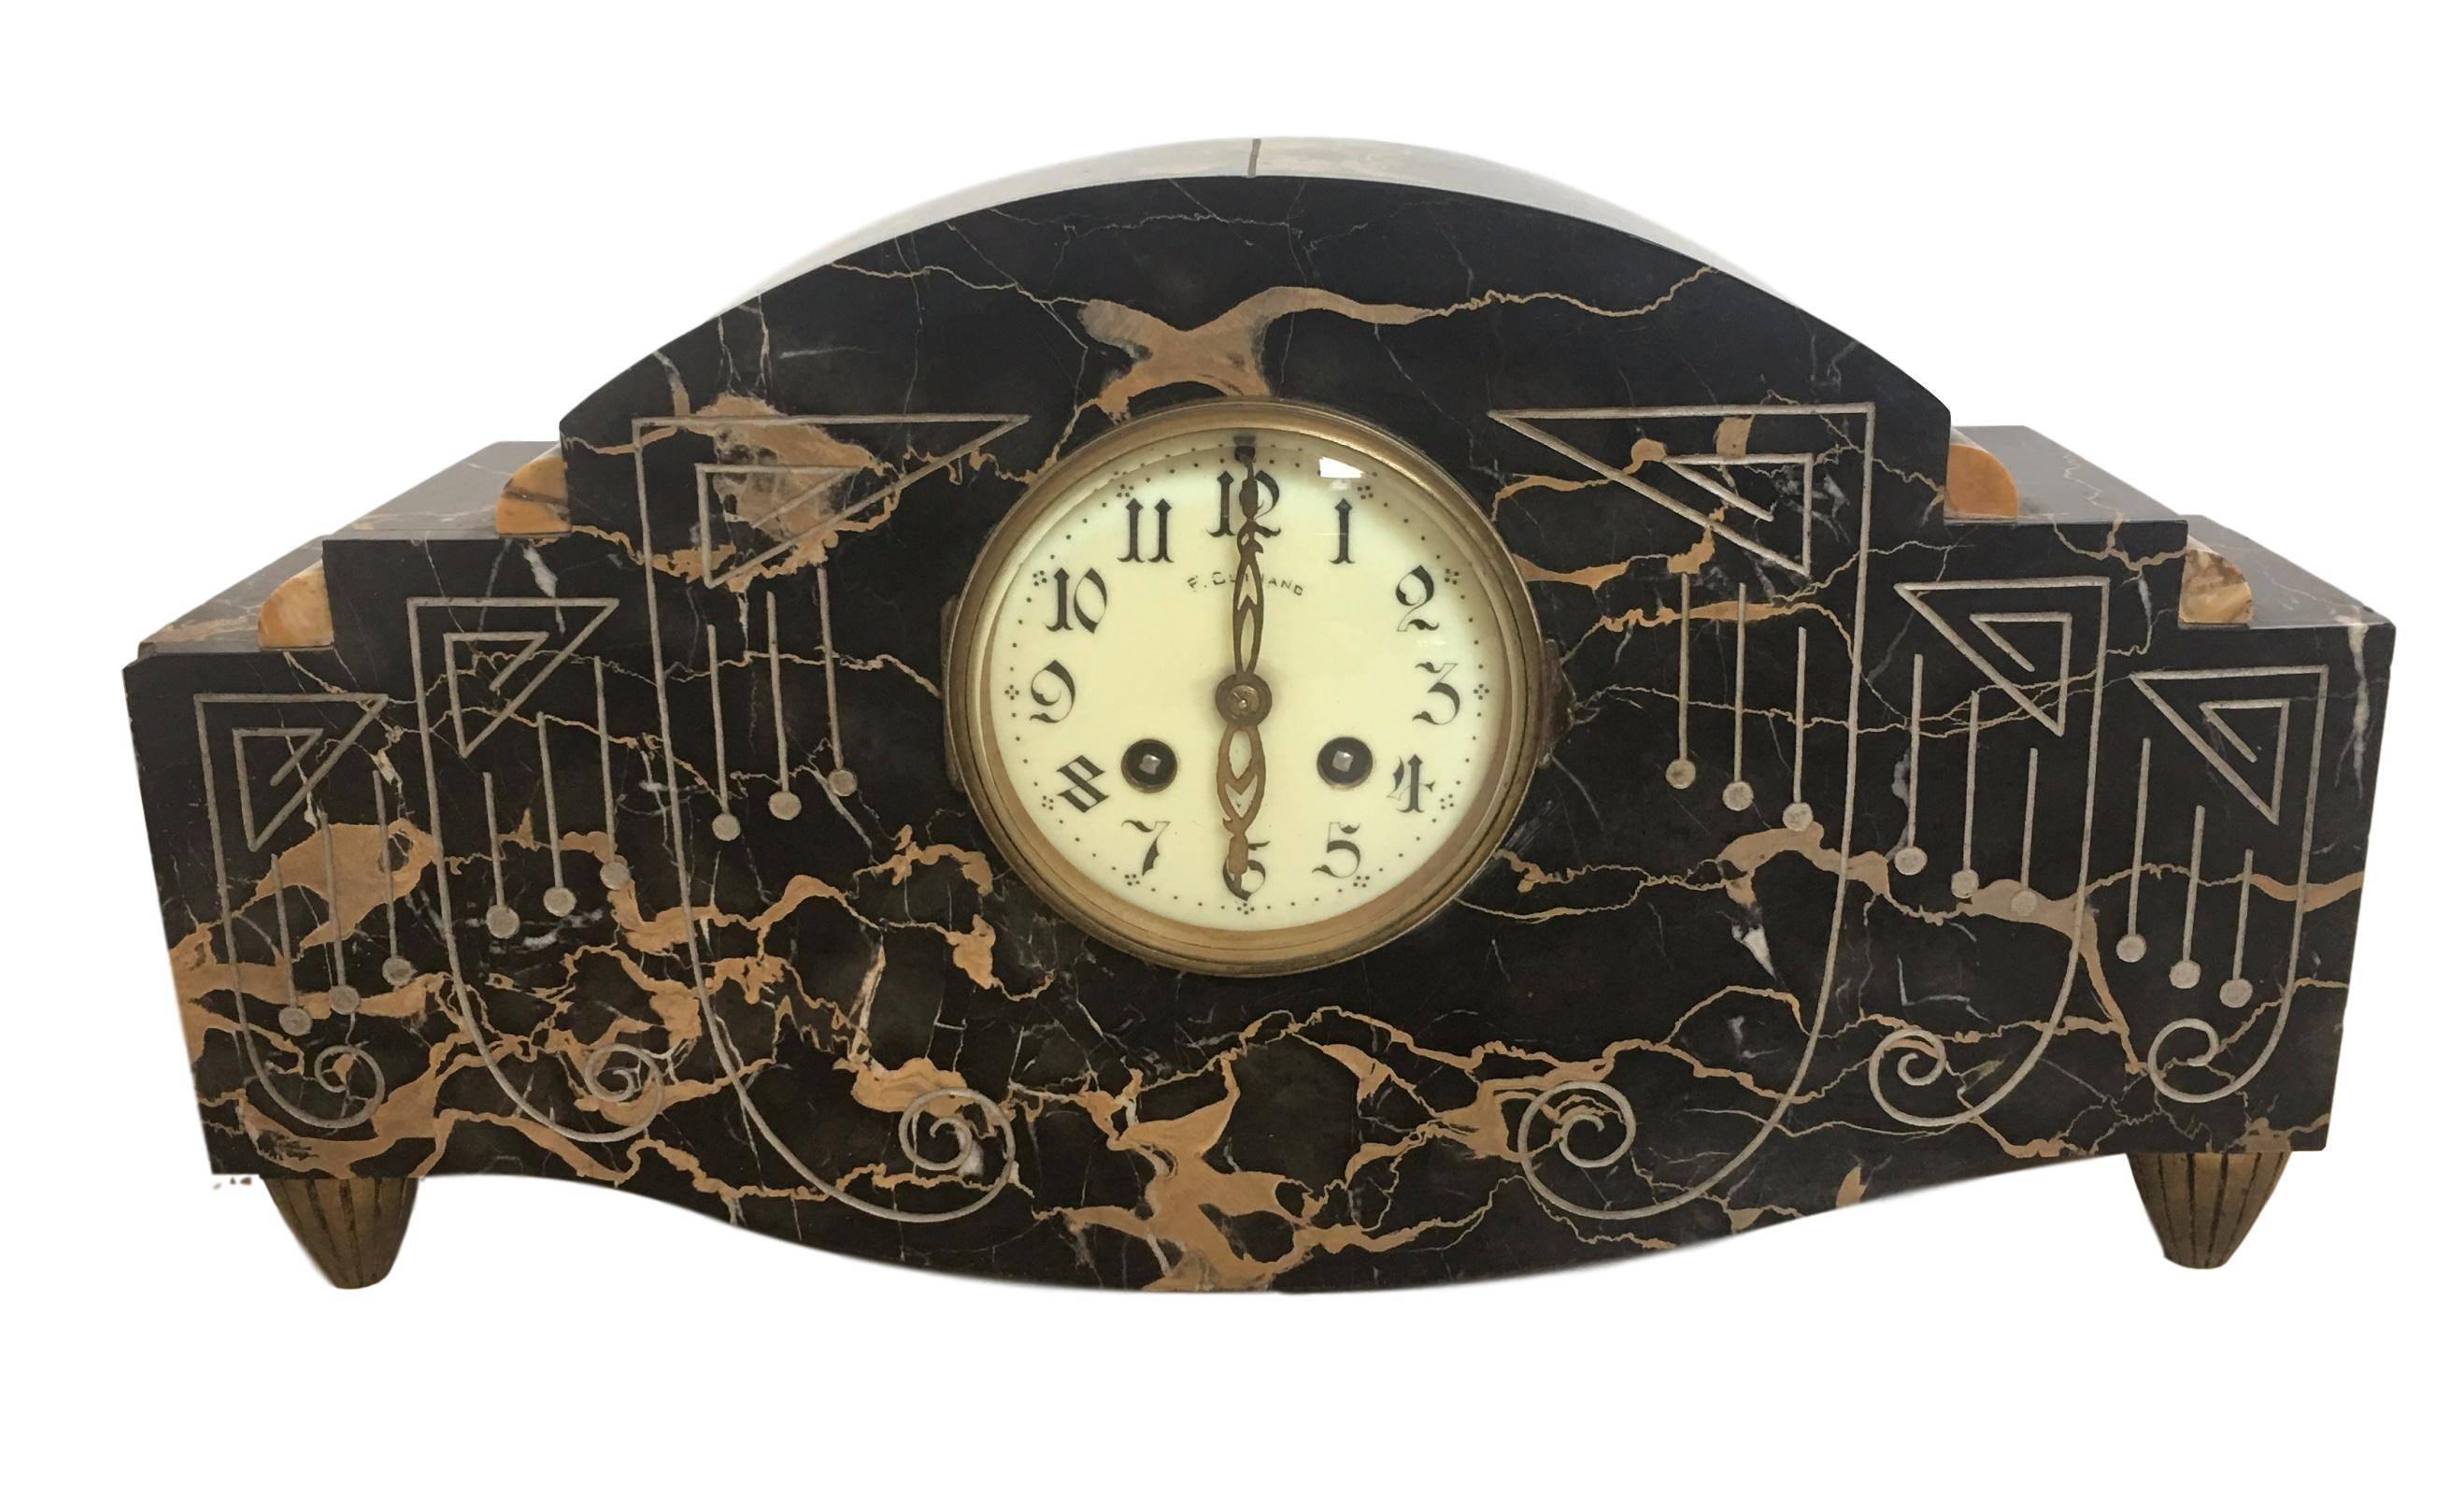 Art Deco clock with ornamentals carved motifs and bronze legs.

Measurements:
Clock H 9.25in, D 4in, W 16.9in
Garniture (each piece) H 7.28in, D 3.3in, W 5.3in.